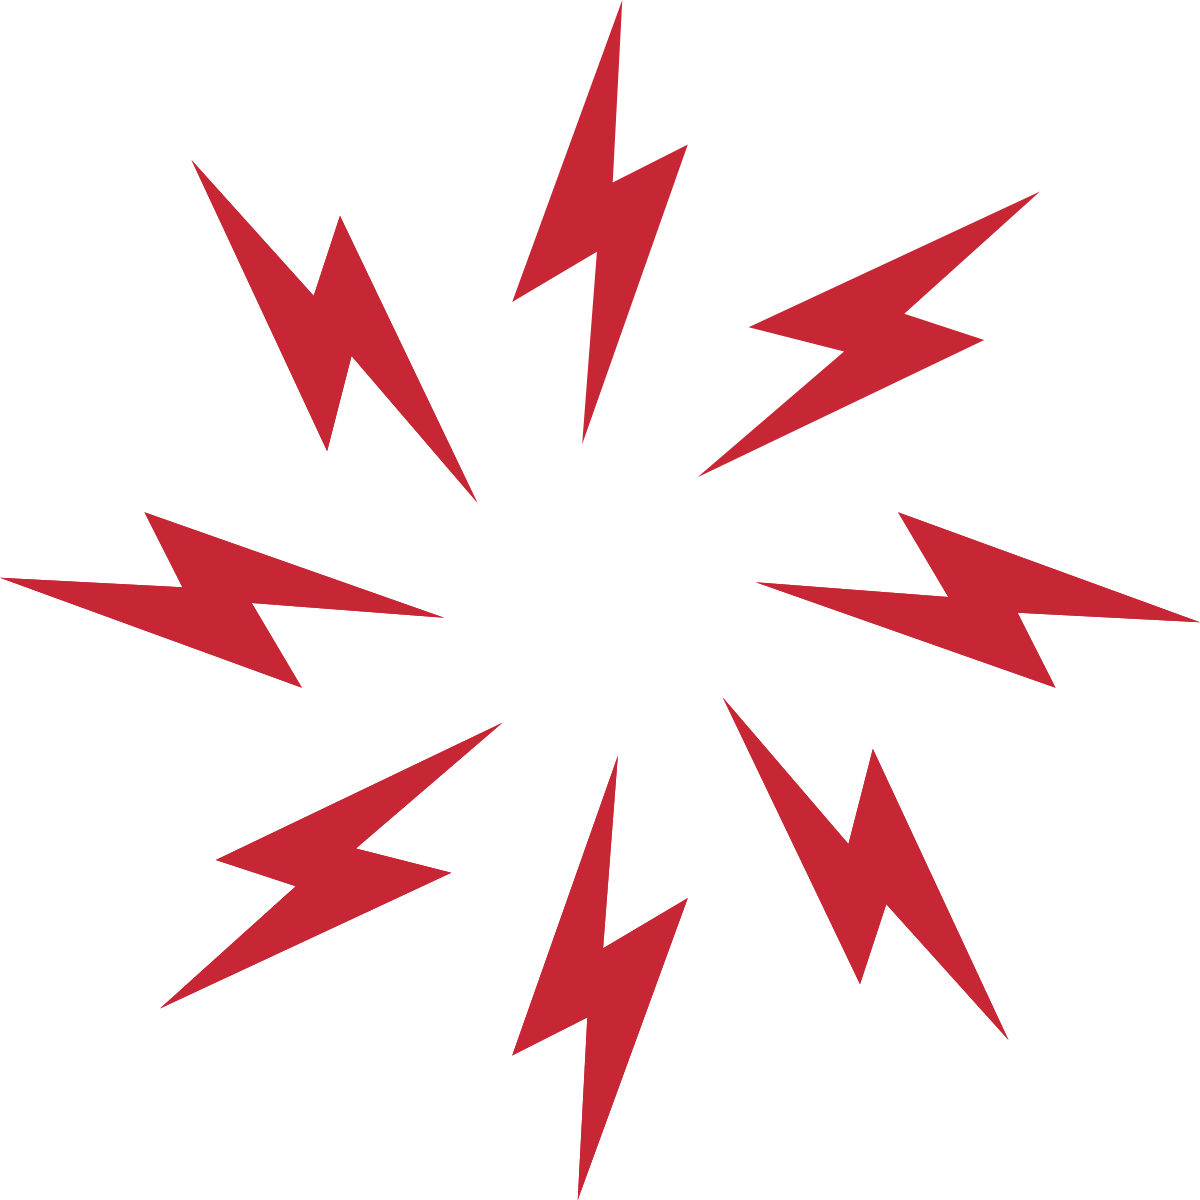 Stylized black starburst with red lightning bolt shapes on a transparent background.